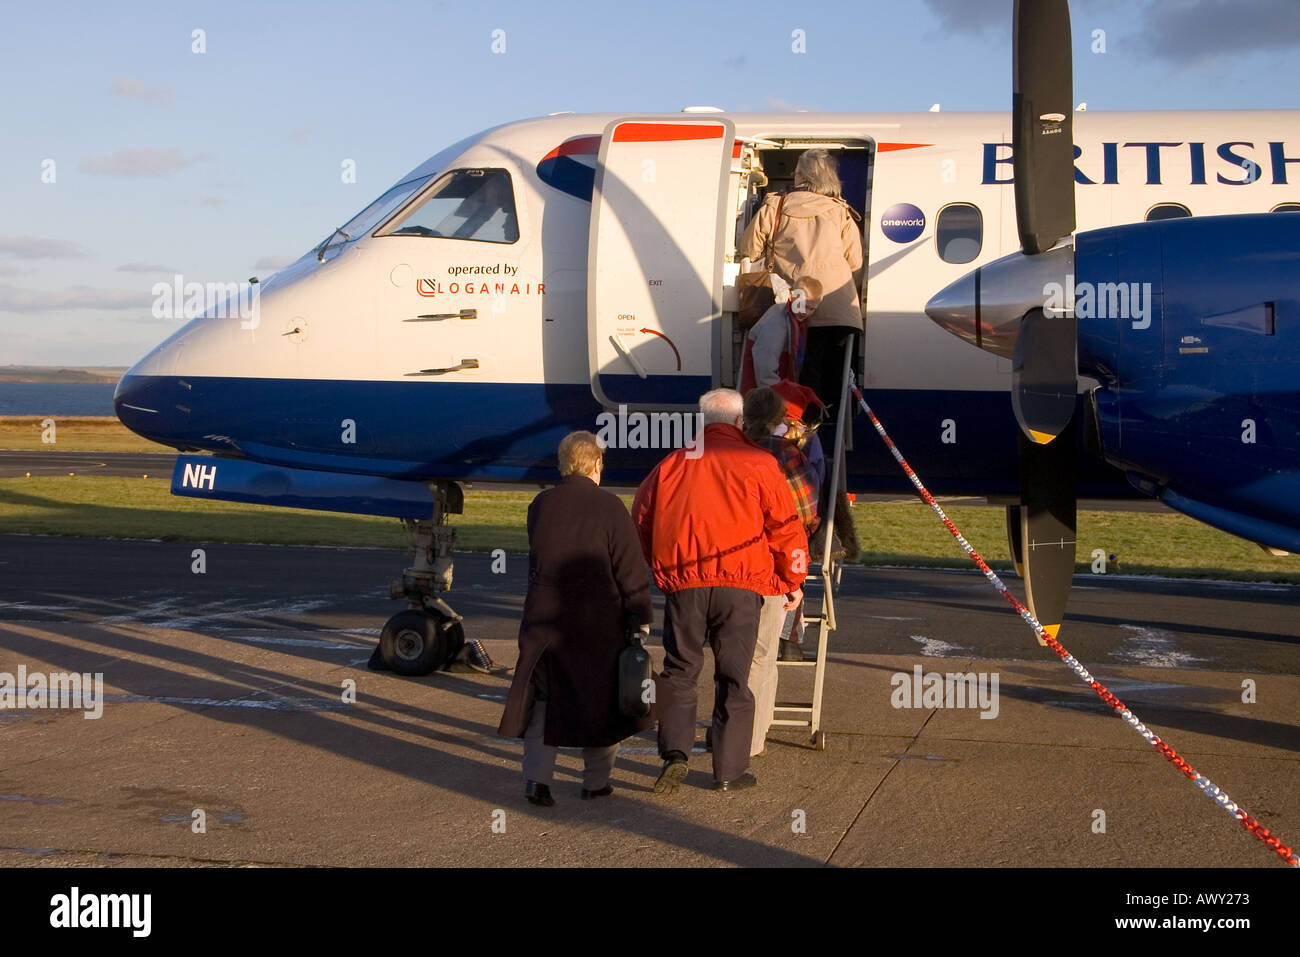 dh british airways plane KIRKWALL AIRPORT ORKNEY Airplane Passengers boarding BA aeroplane Saab 340 Stock Photo